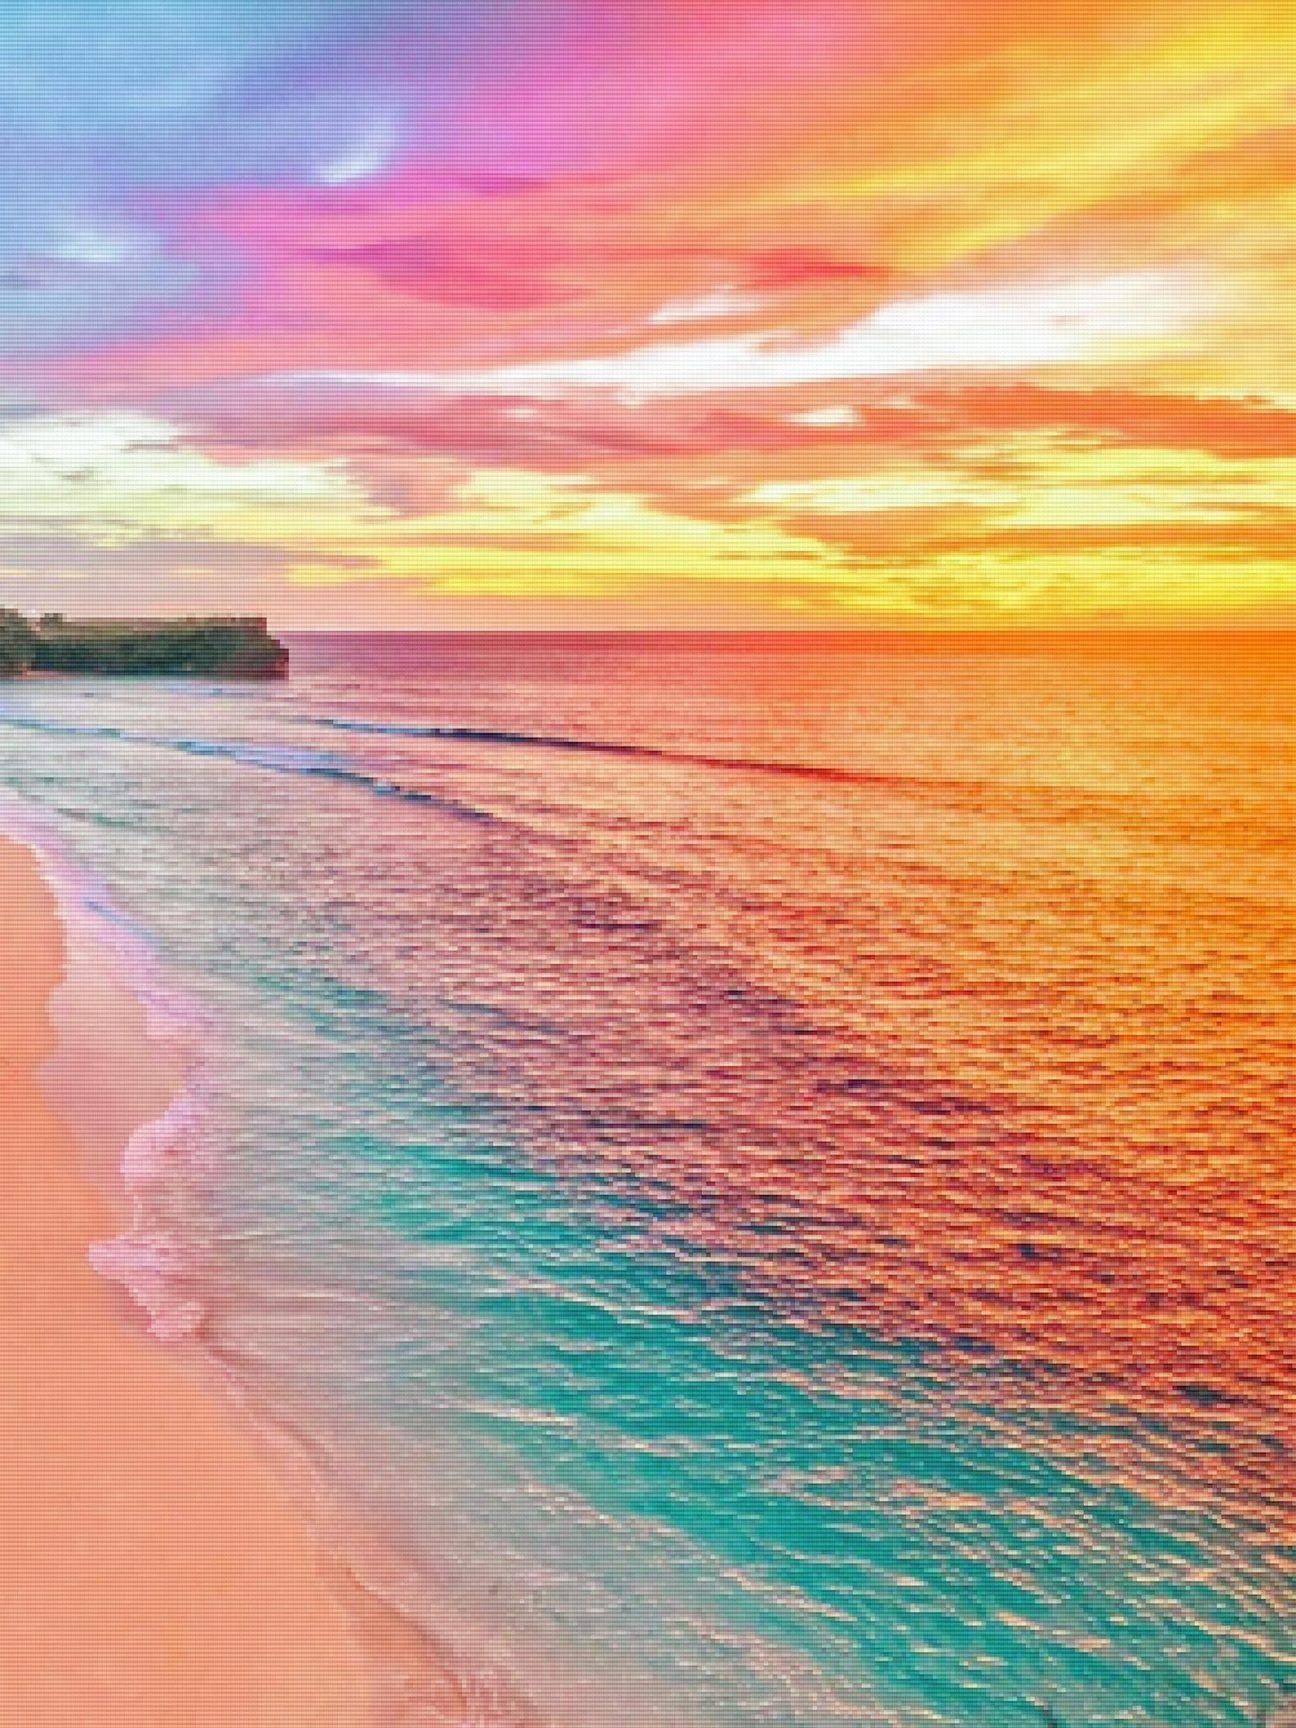 Beach Sunset Rainbow Wallpapers